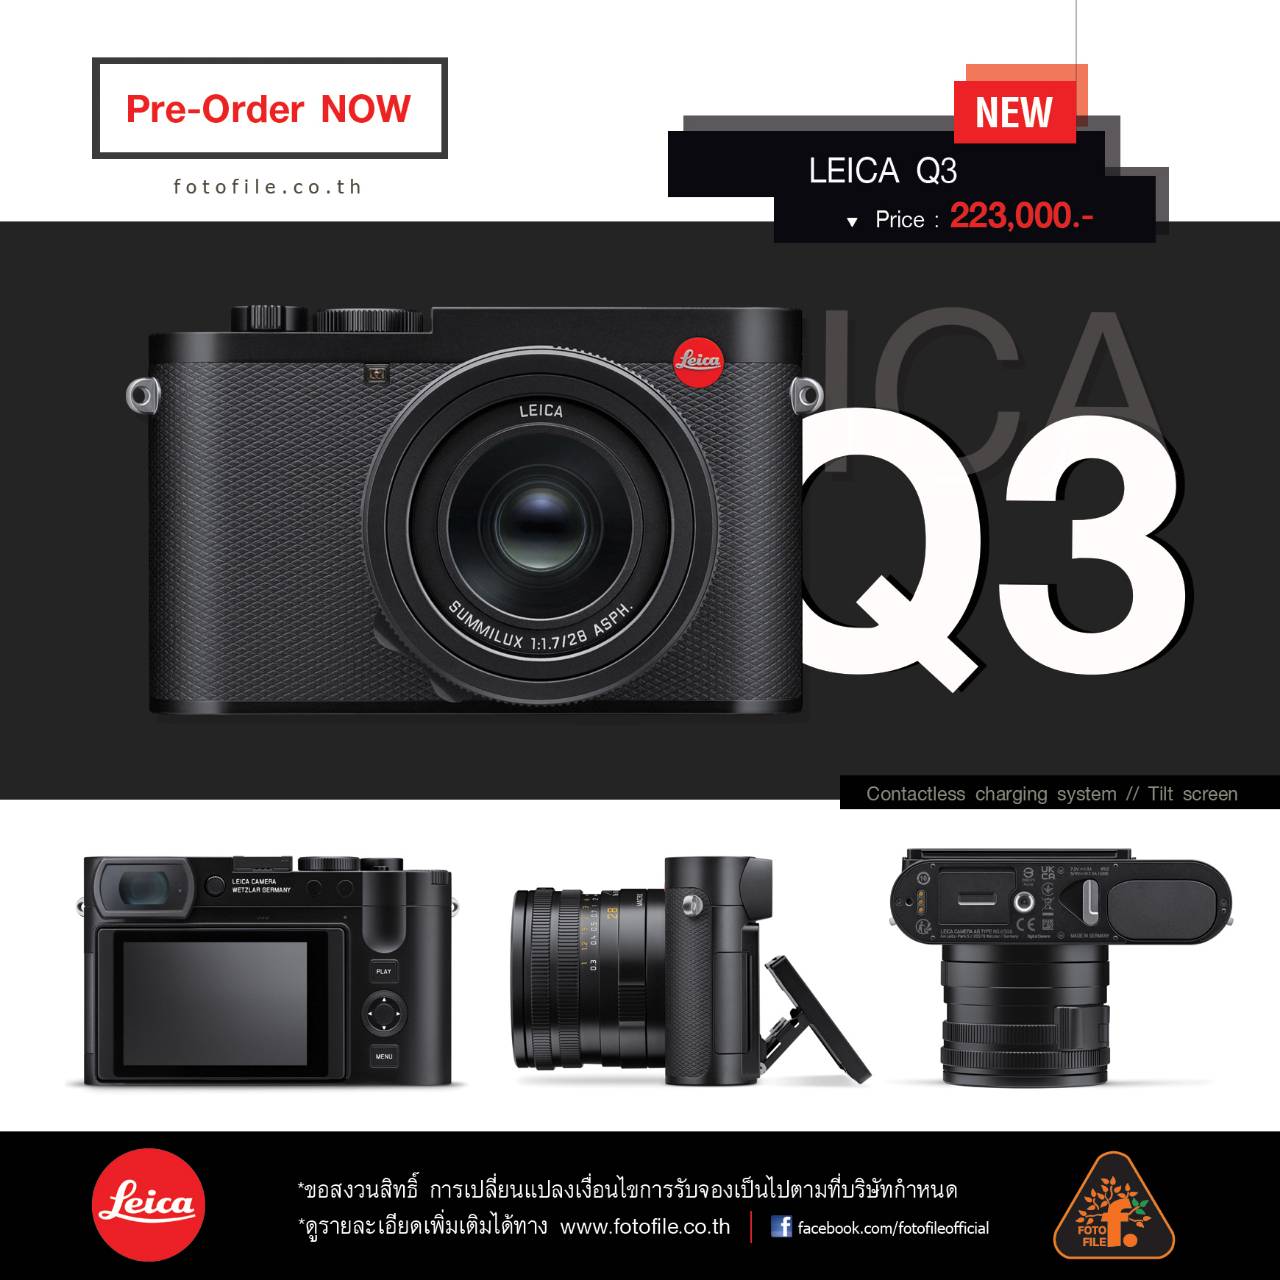 Pre-Order] Leica Q3 Digital Camera FOTOFILE